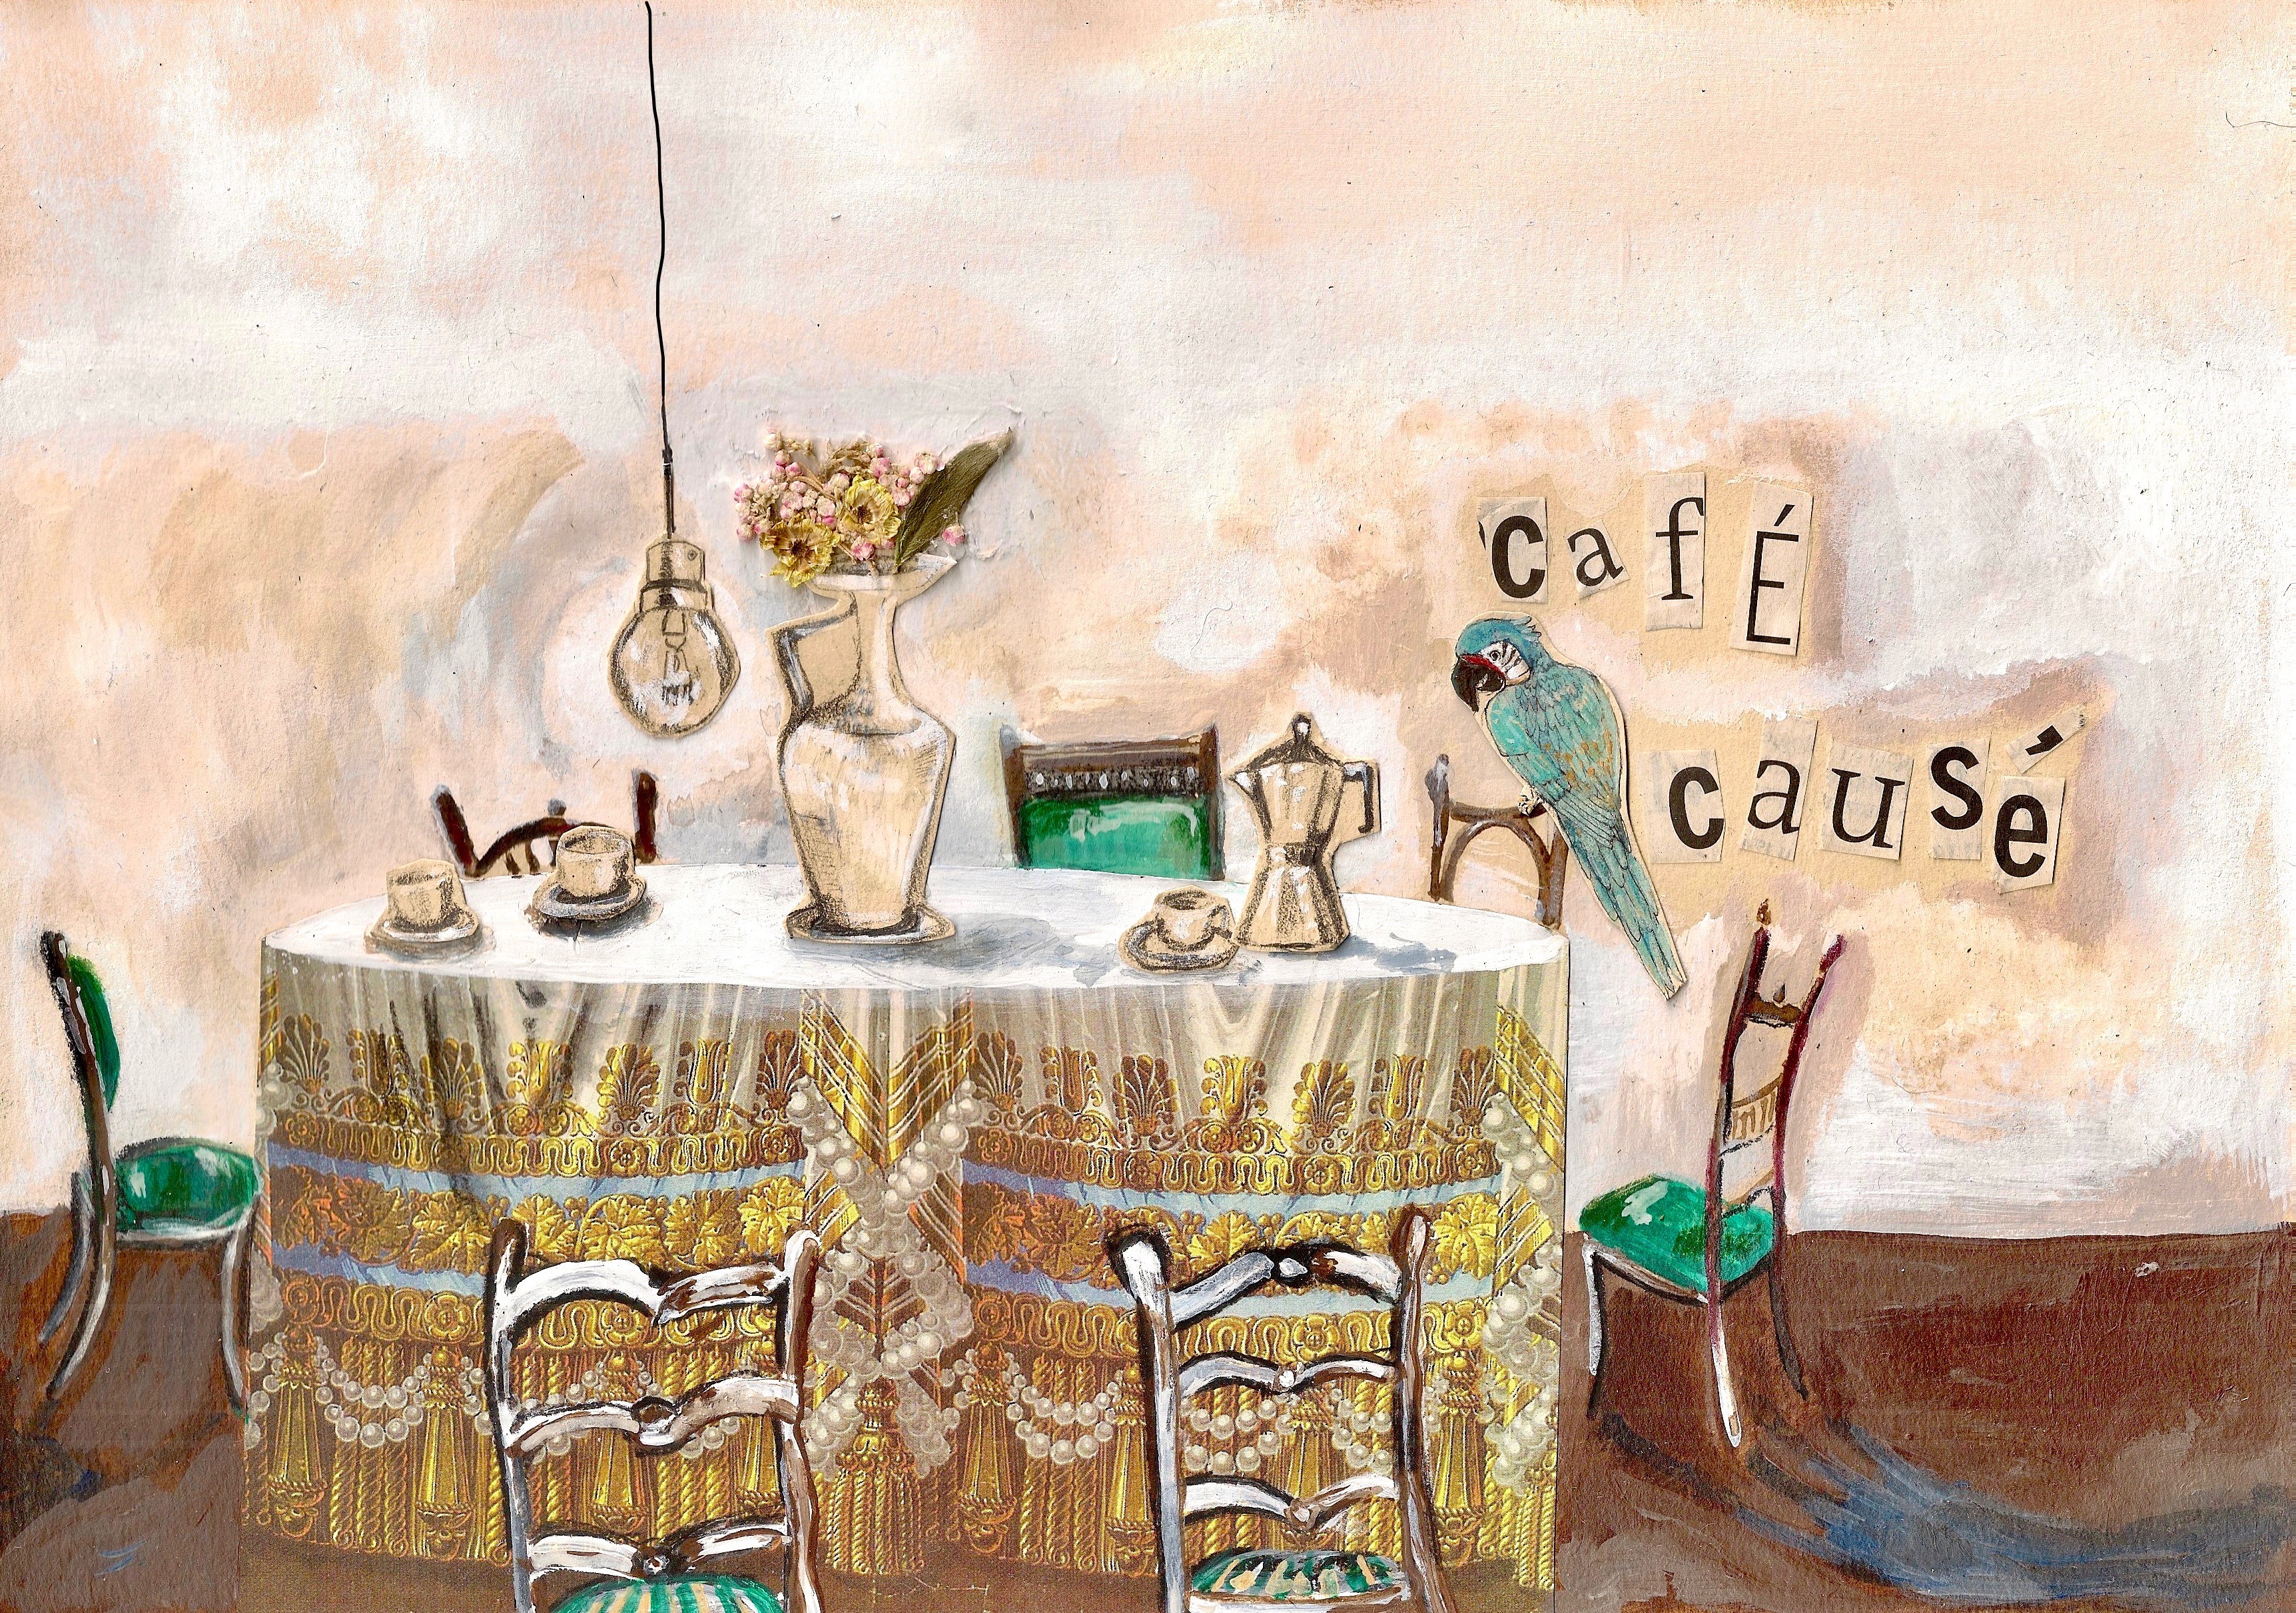 Café Causé